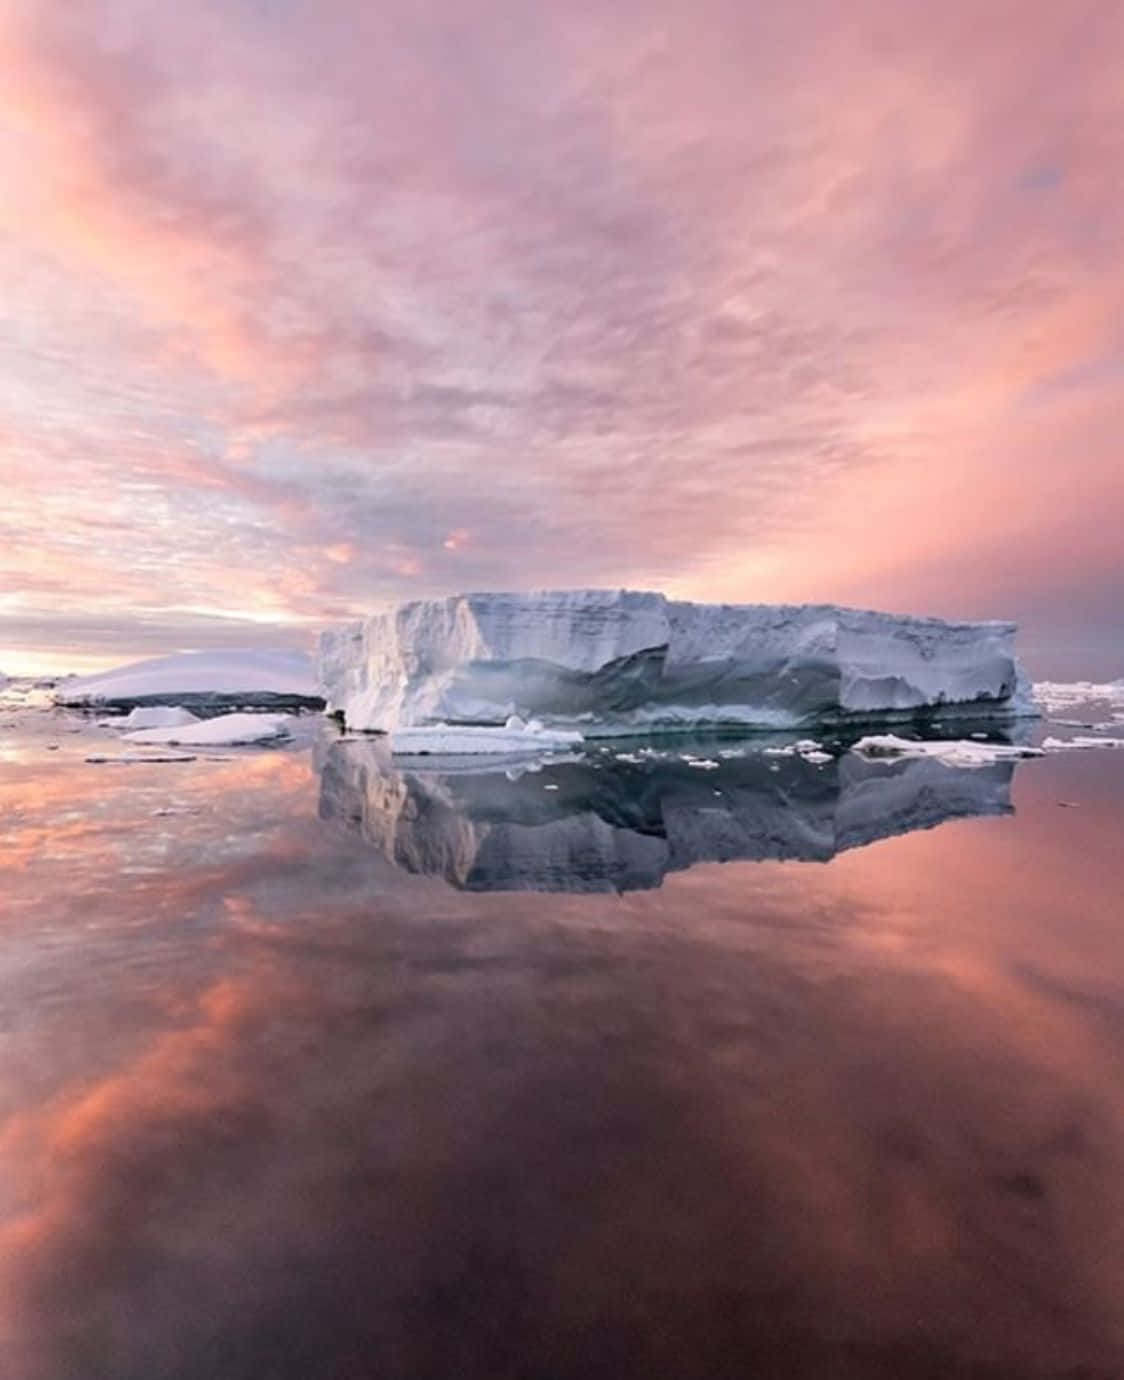 Vastly Beautiful and Majestic, Antarctica's Natural Glacier Landscape